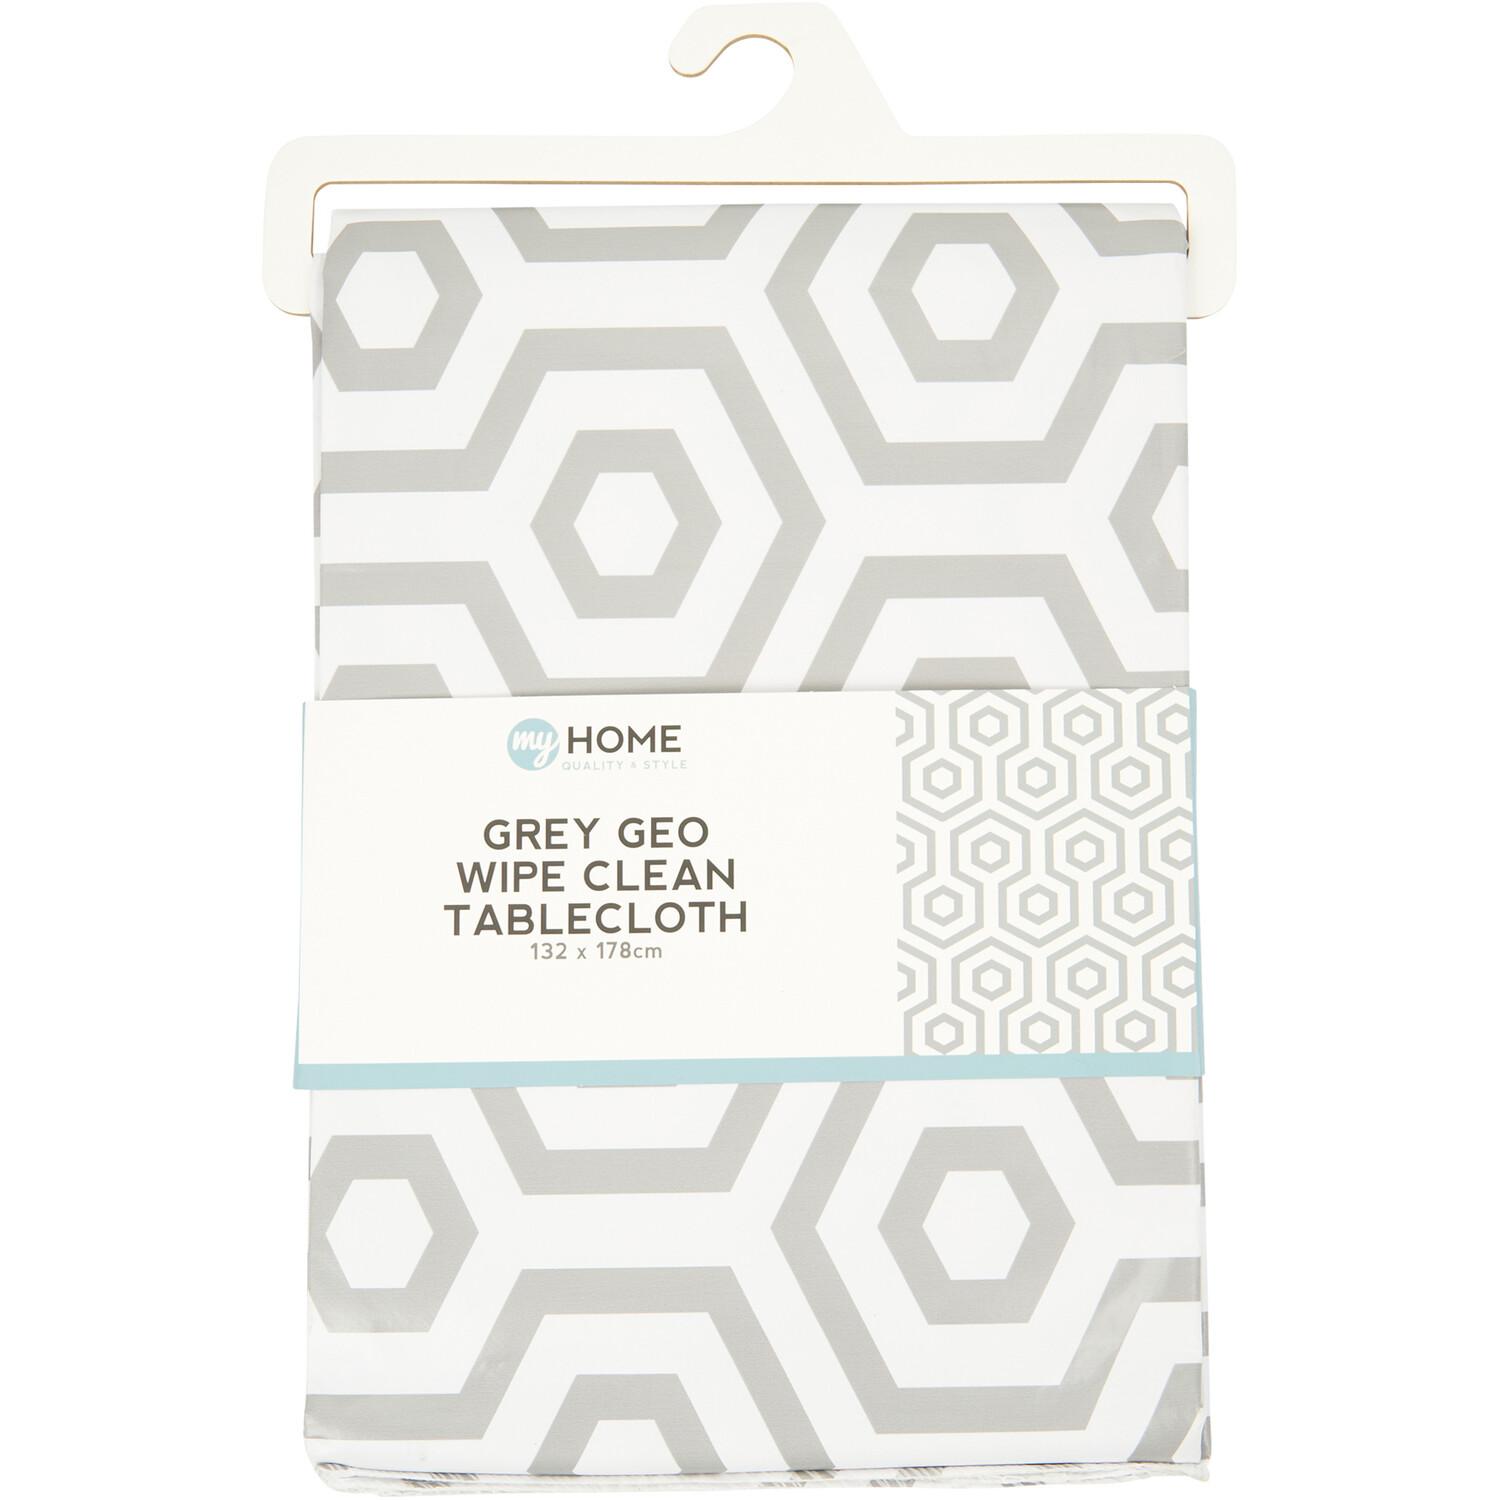 Grey Geo Wipe Clean Tablecloth - Grey Image 1